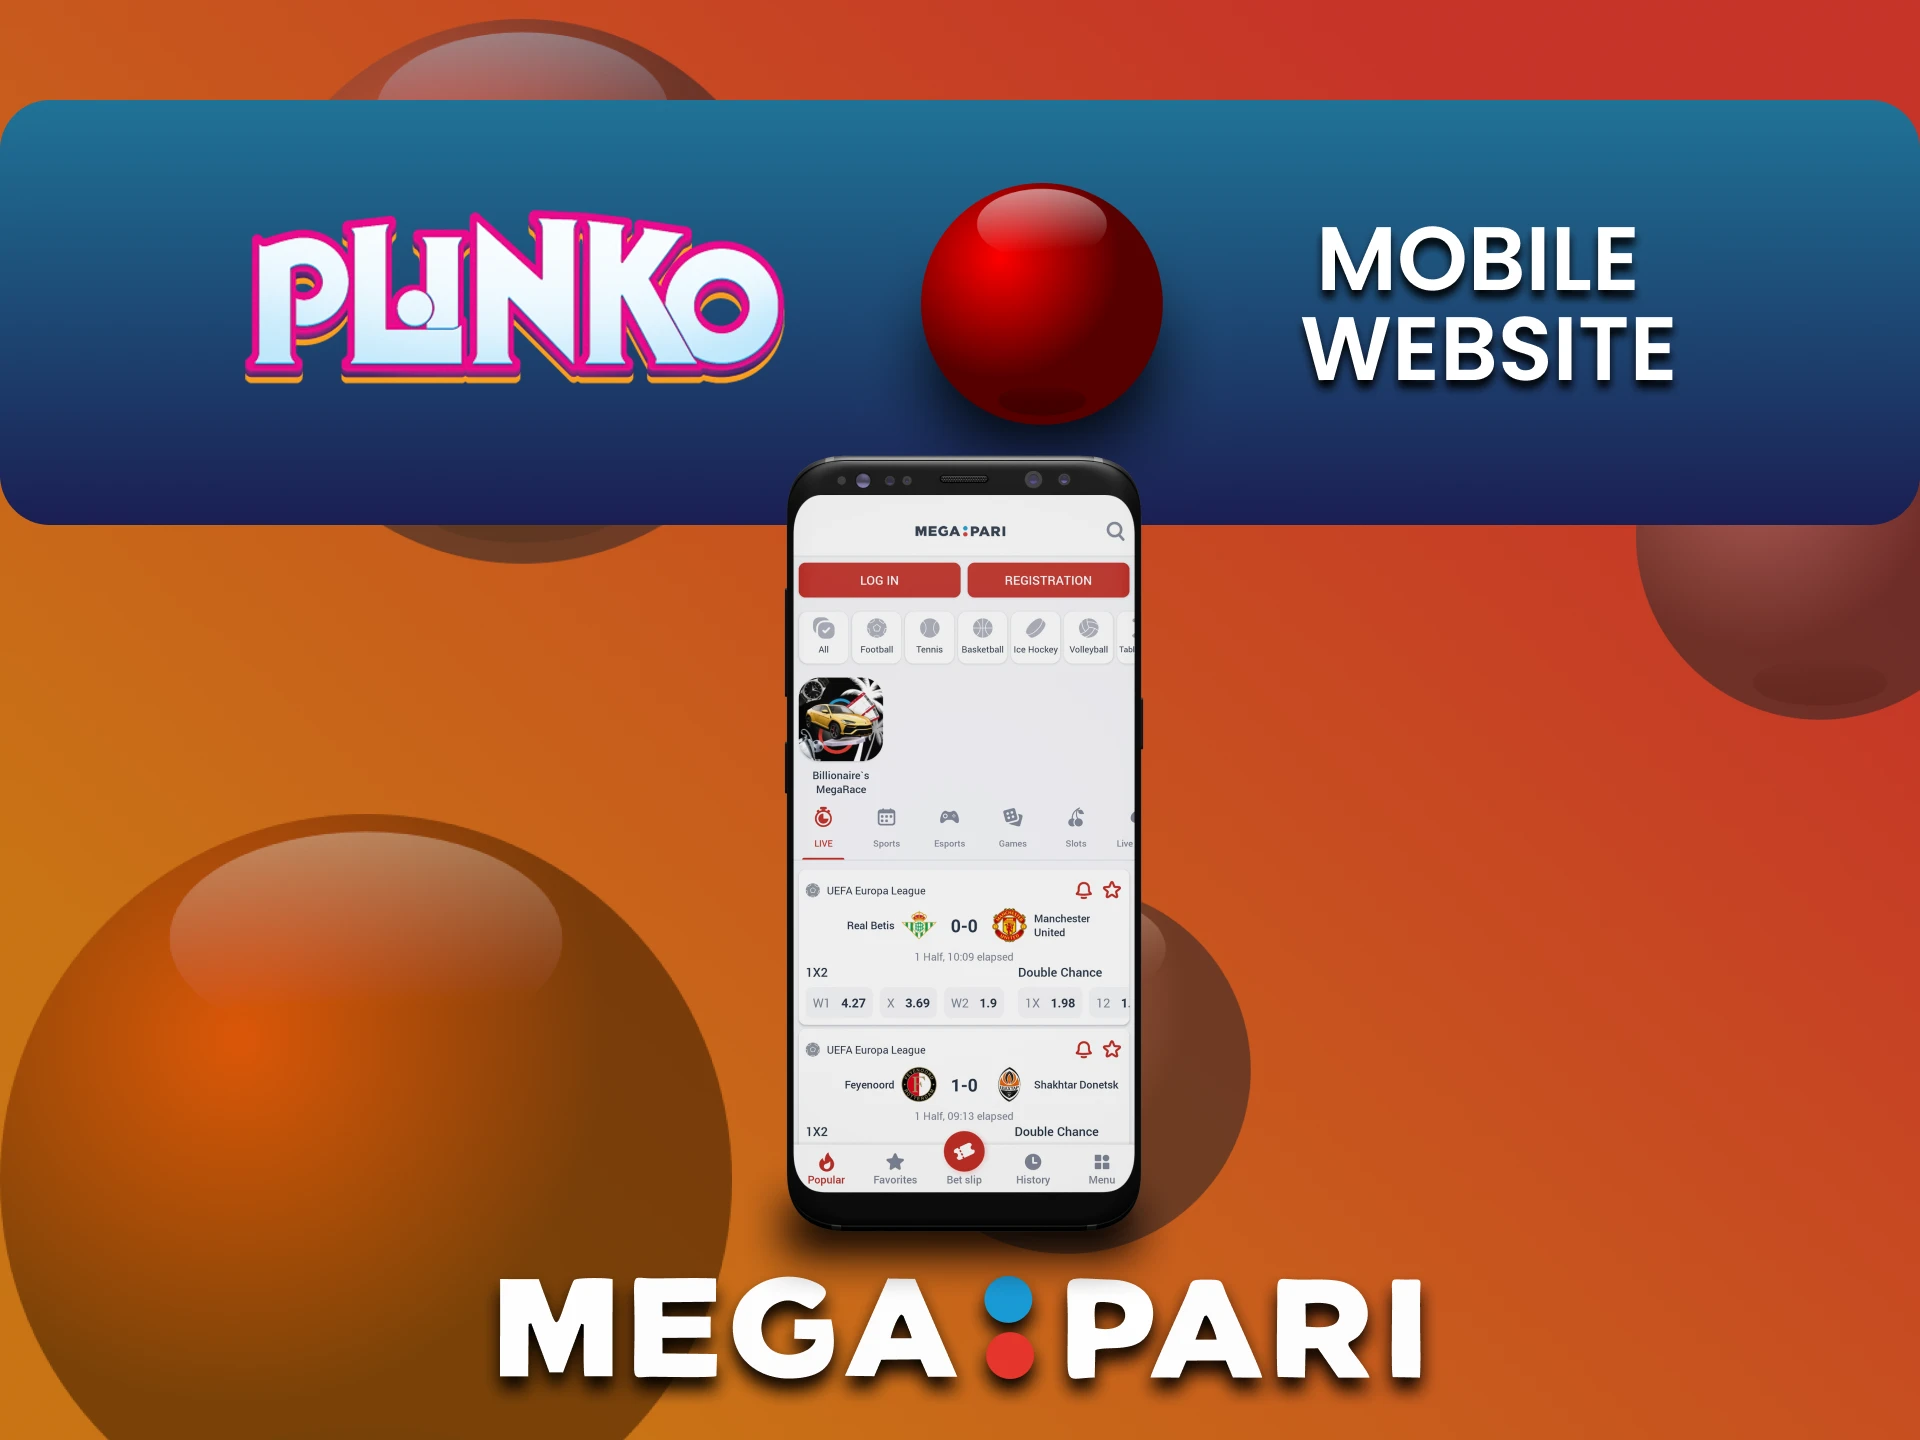 Visit the mobile version of the Megapari website for Plinko.